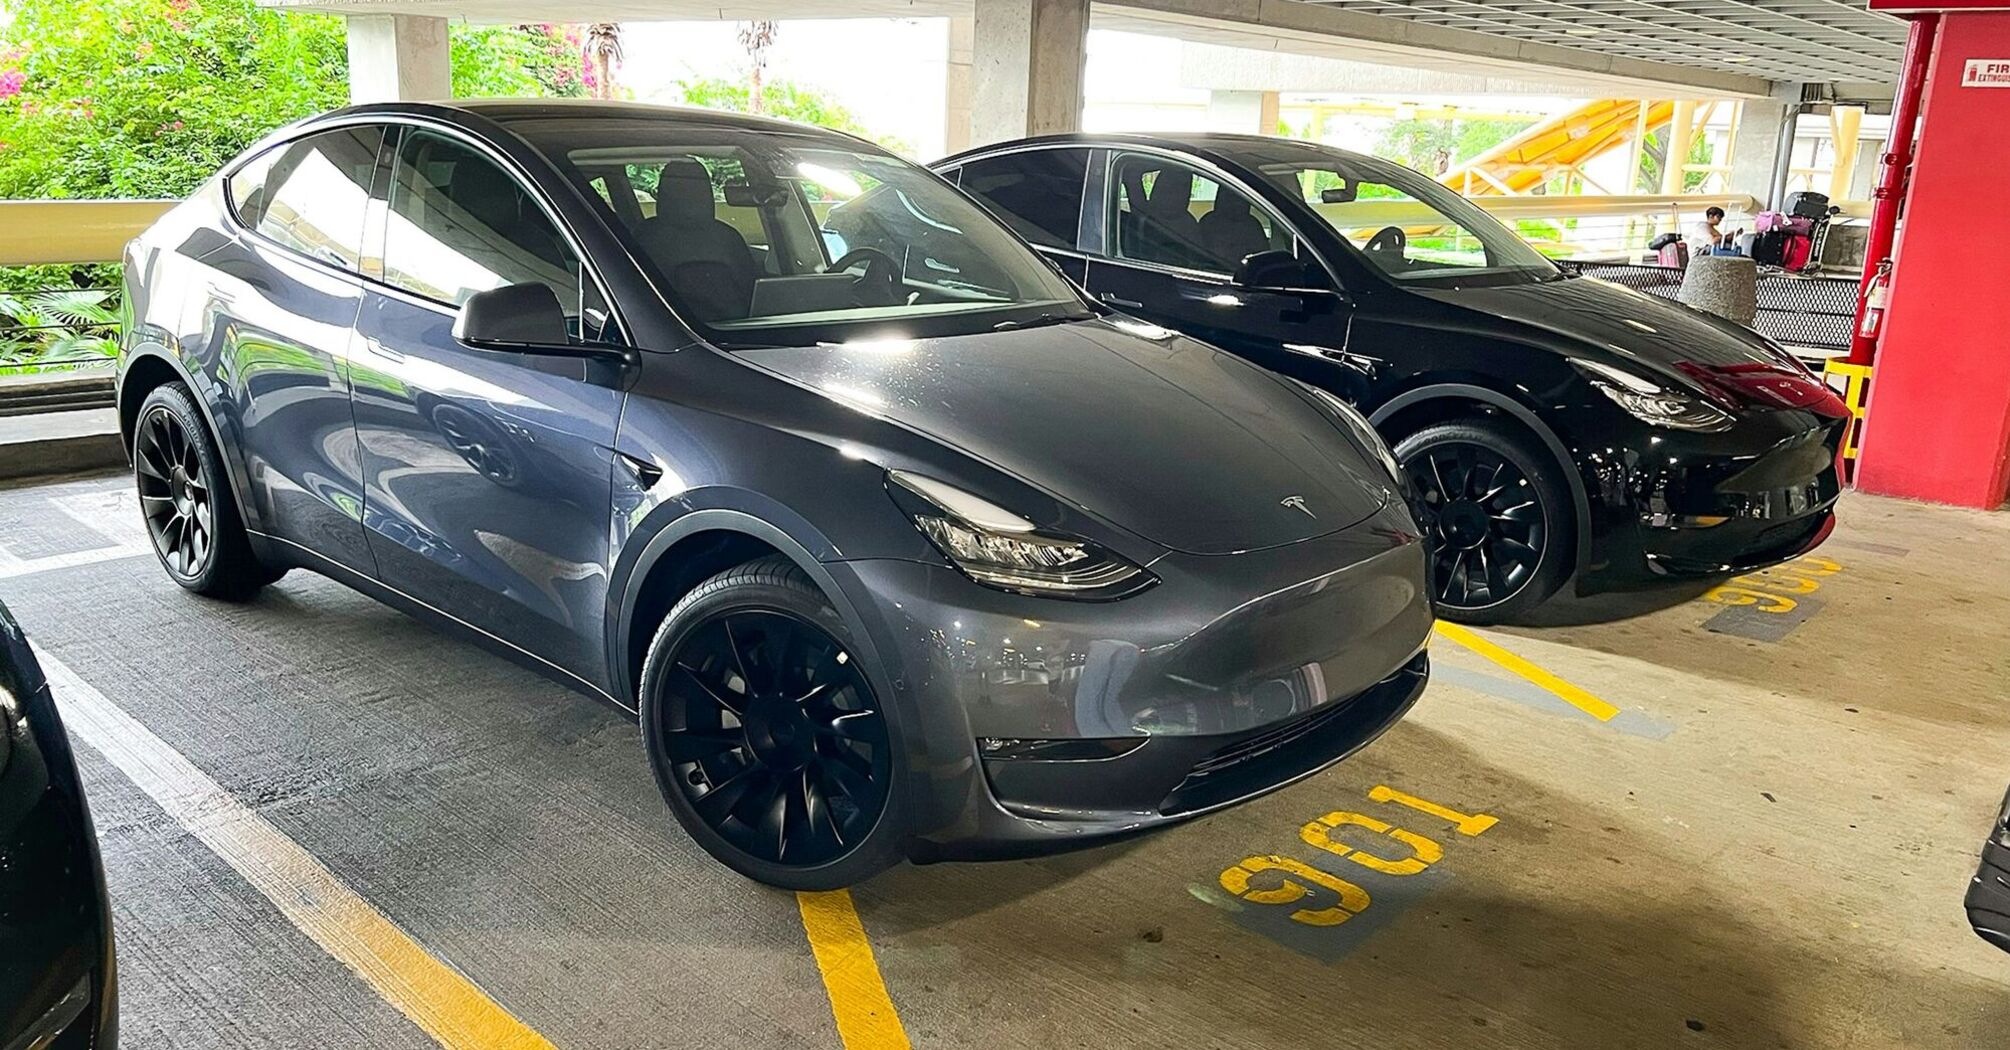 Tesla vehicles parked in a rental car lot